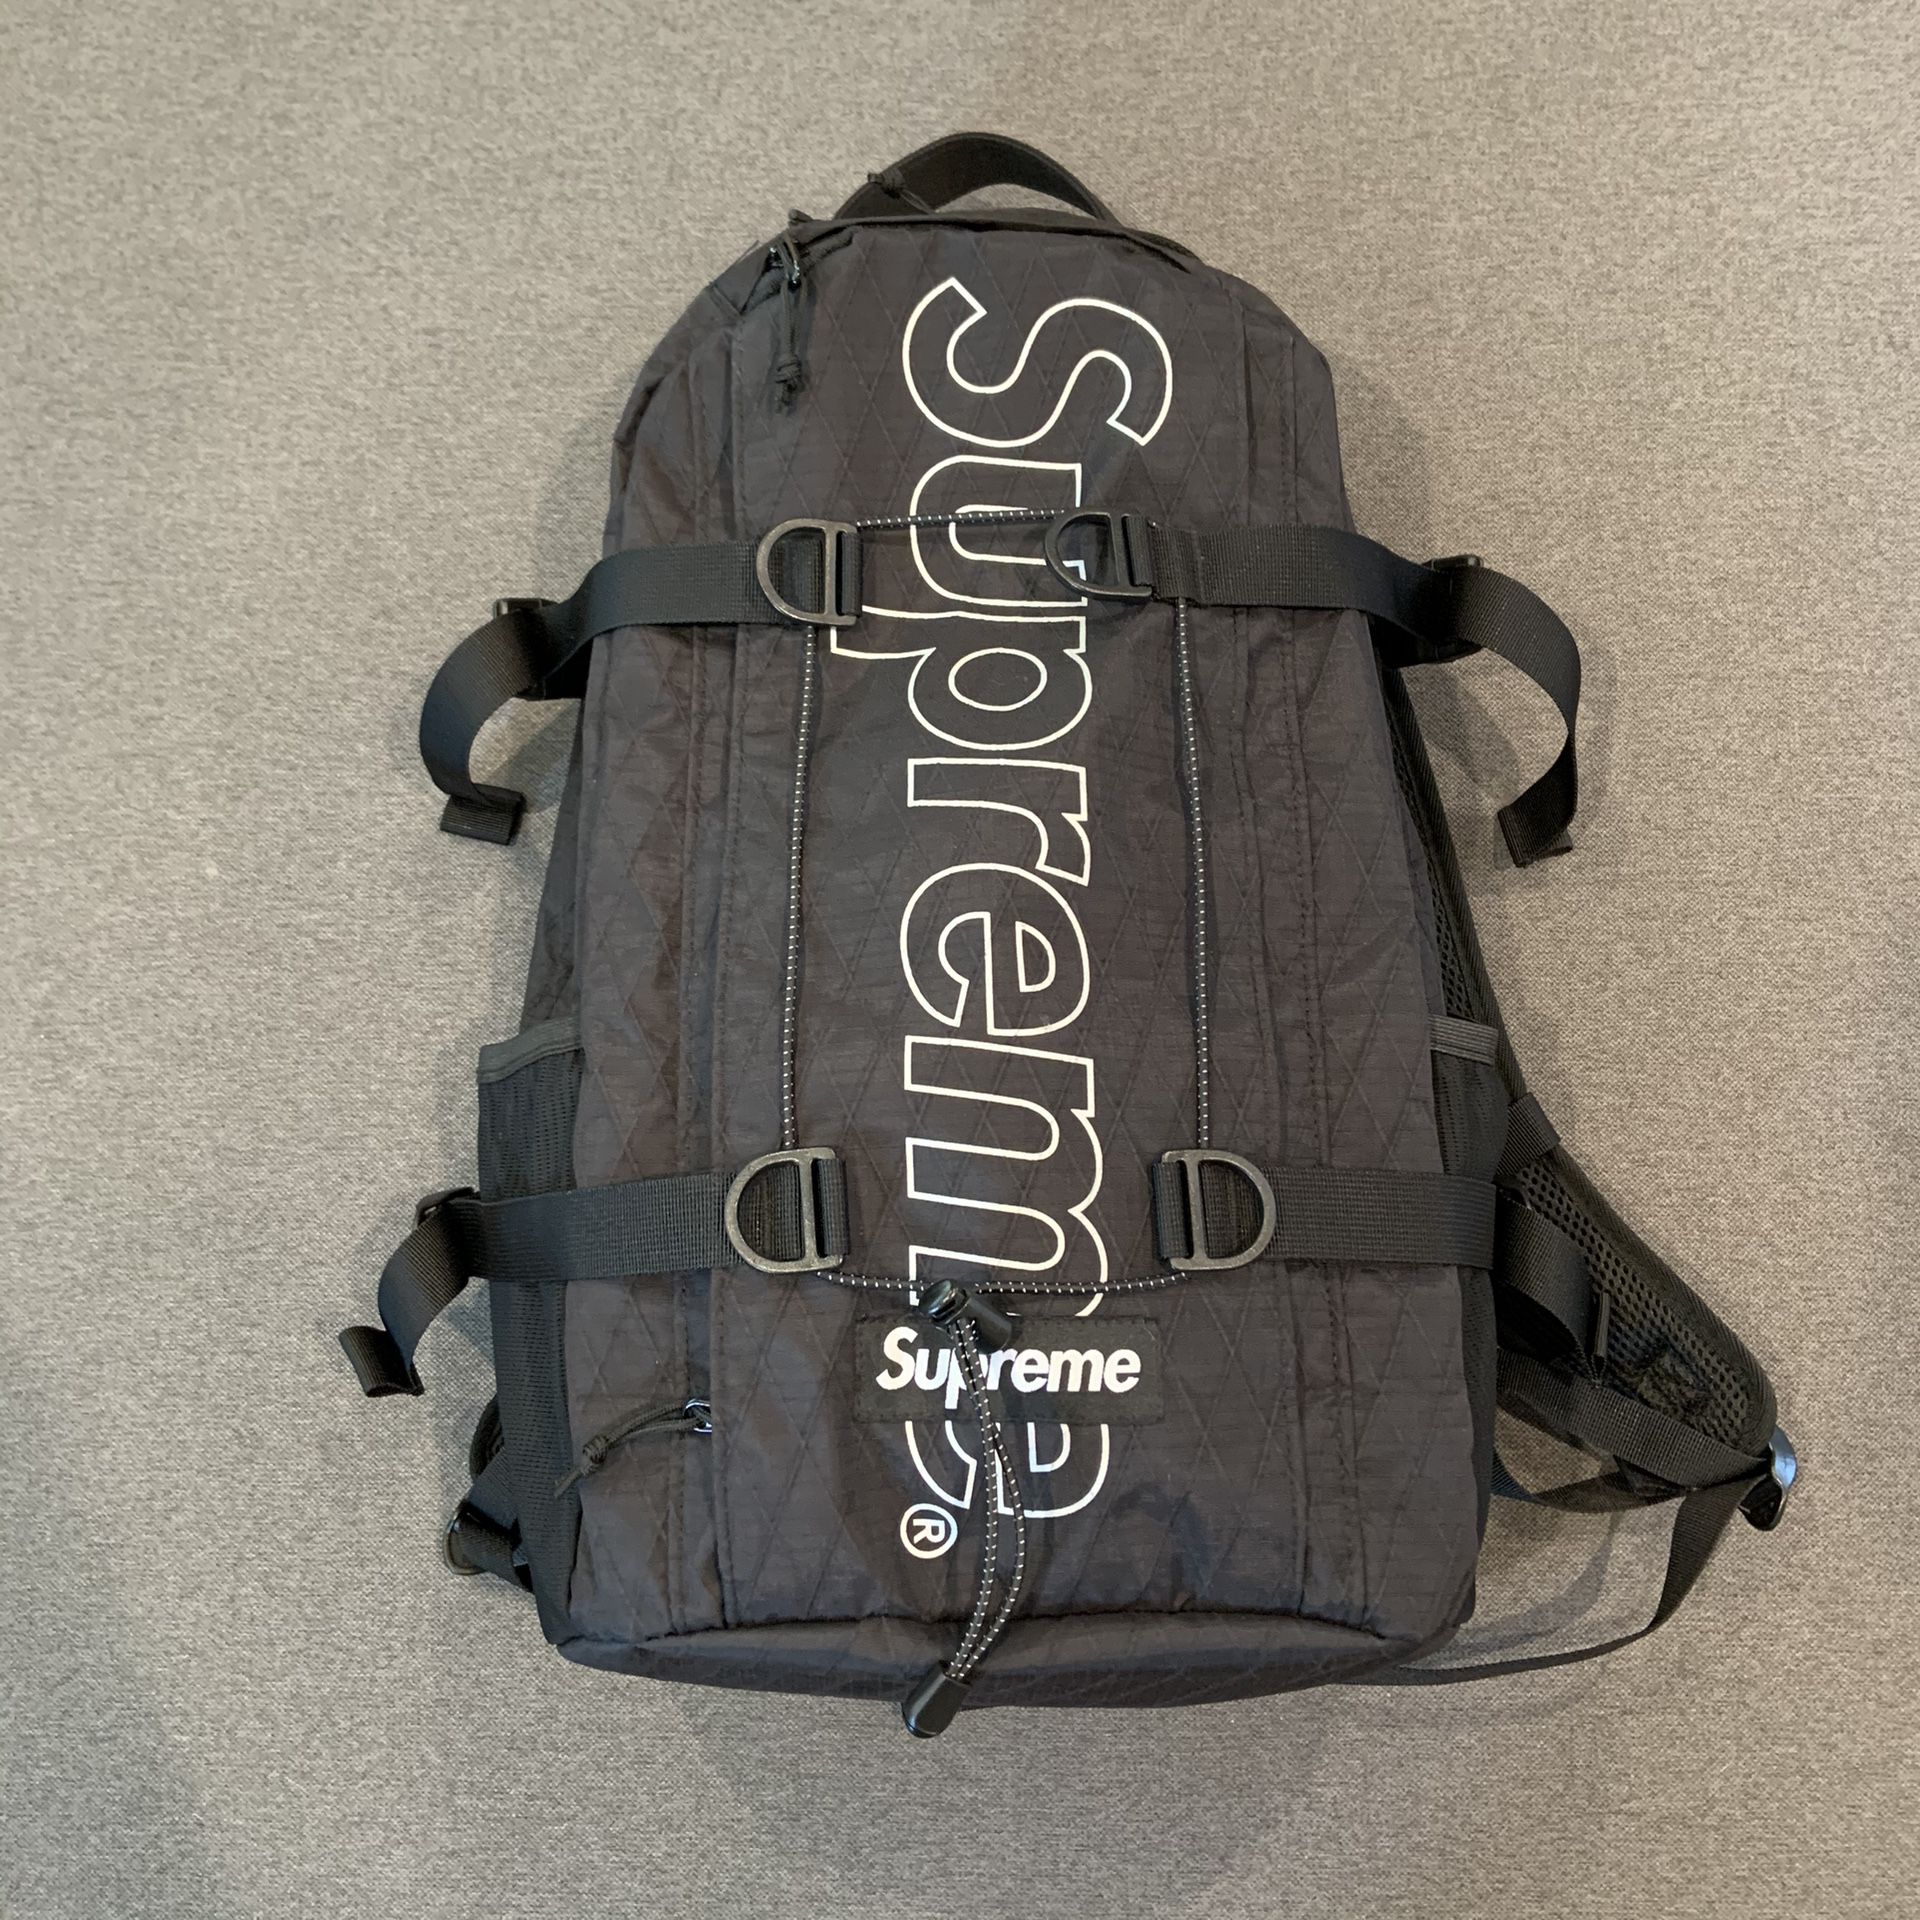 Supreme backpack